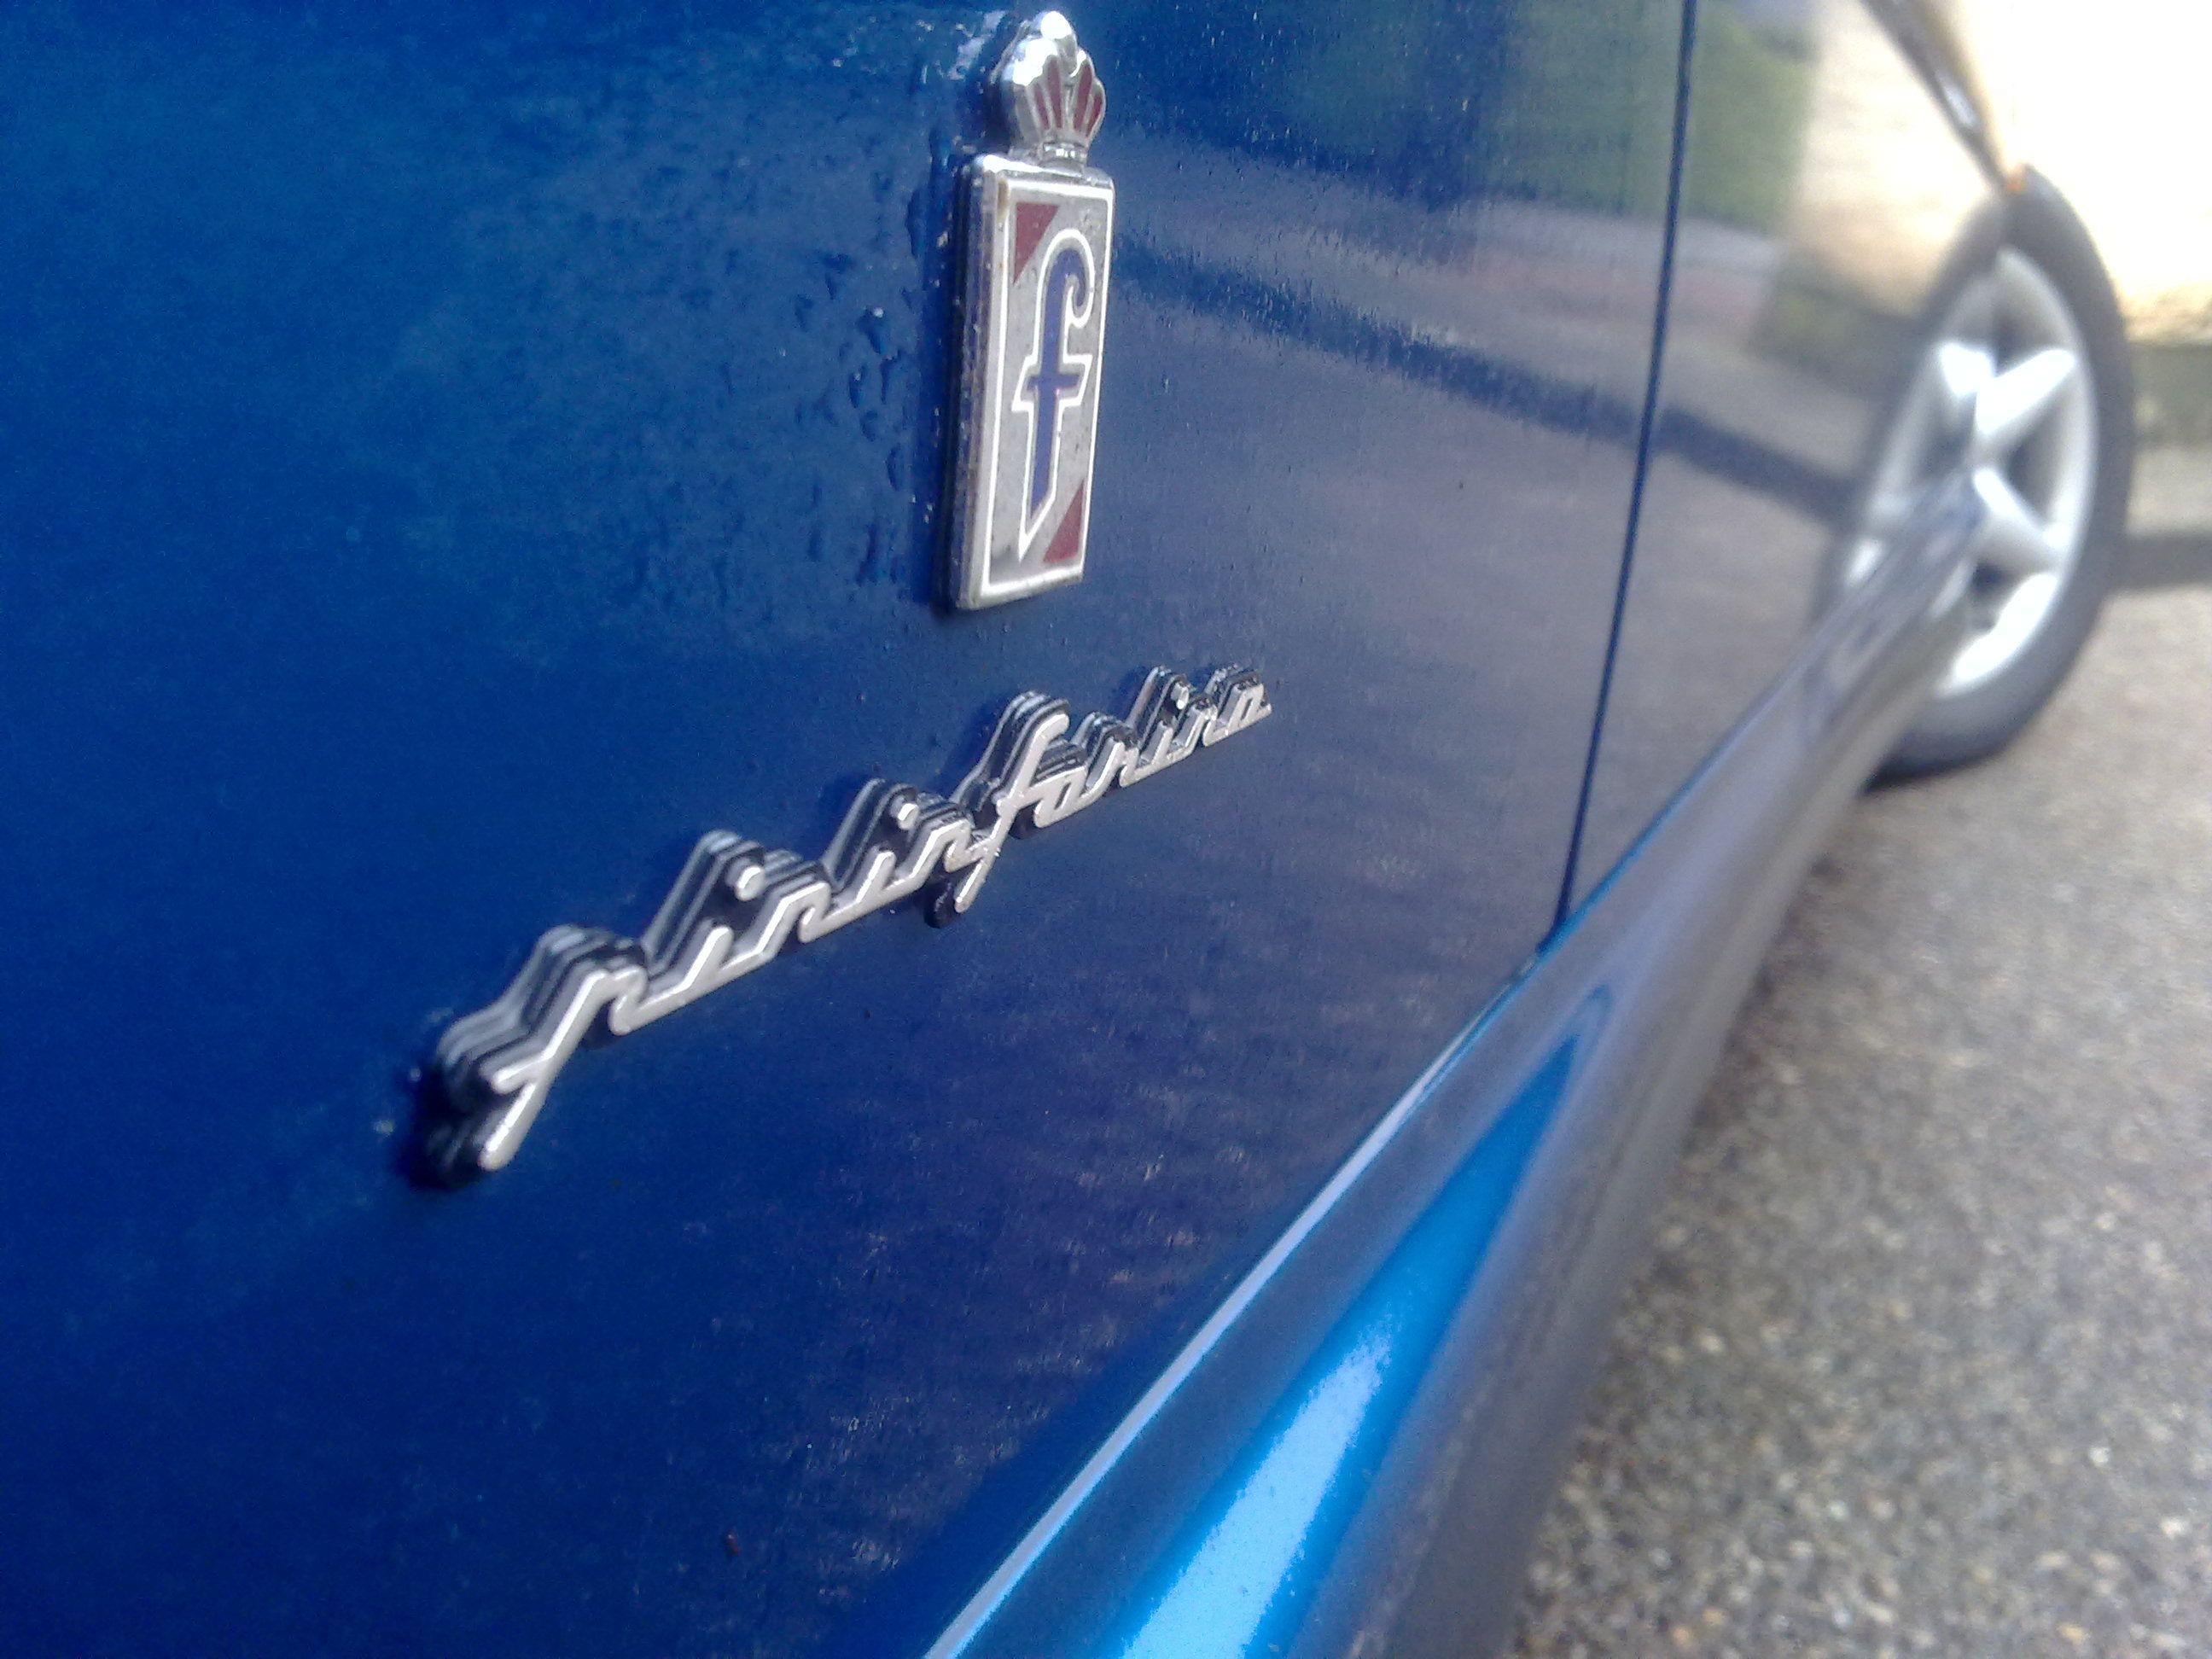 Pininfarina Car Logo - File:Carrosserie signée Pininfarina coupé 406.jpg - Wikimedia Commons